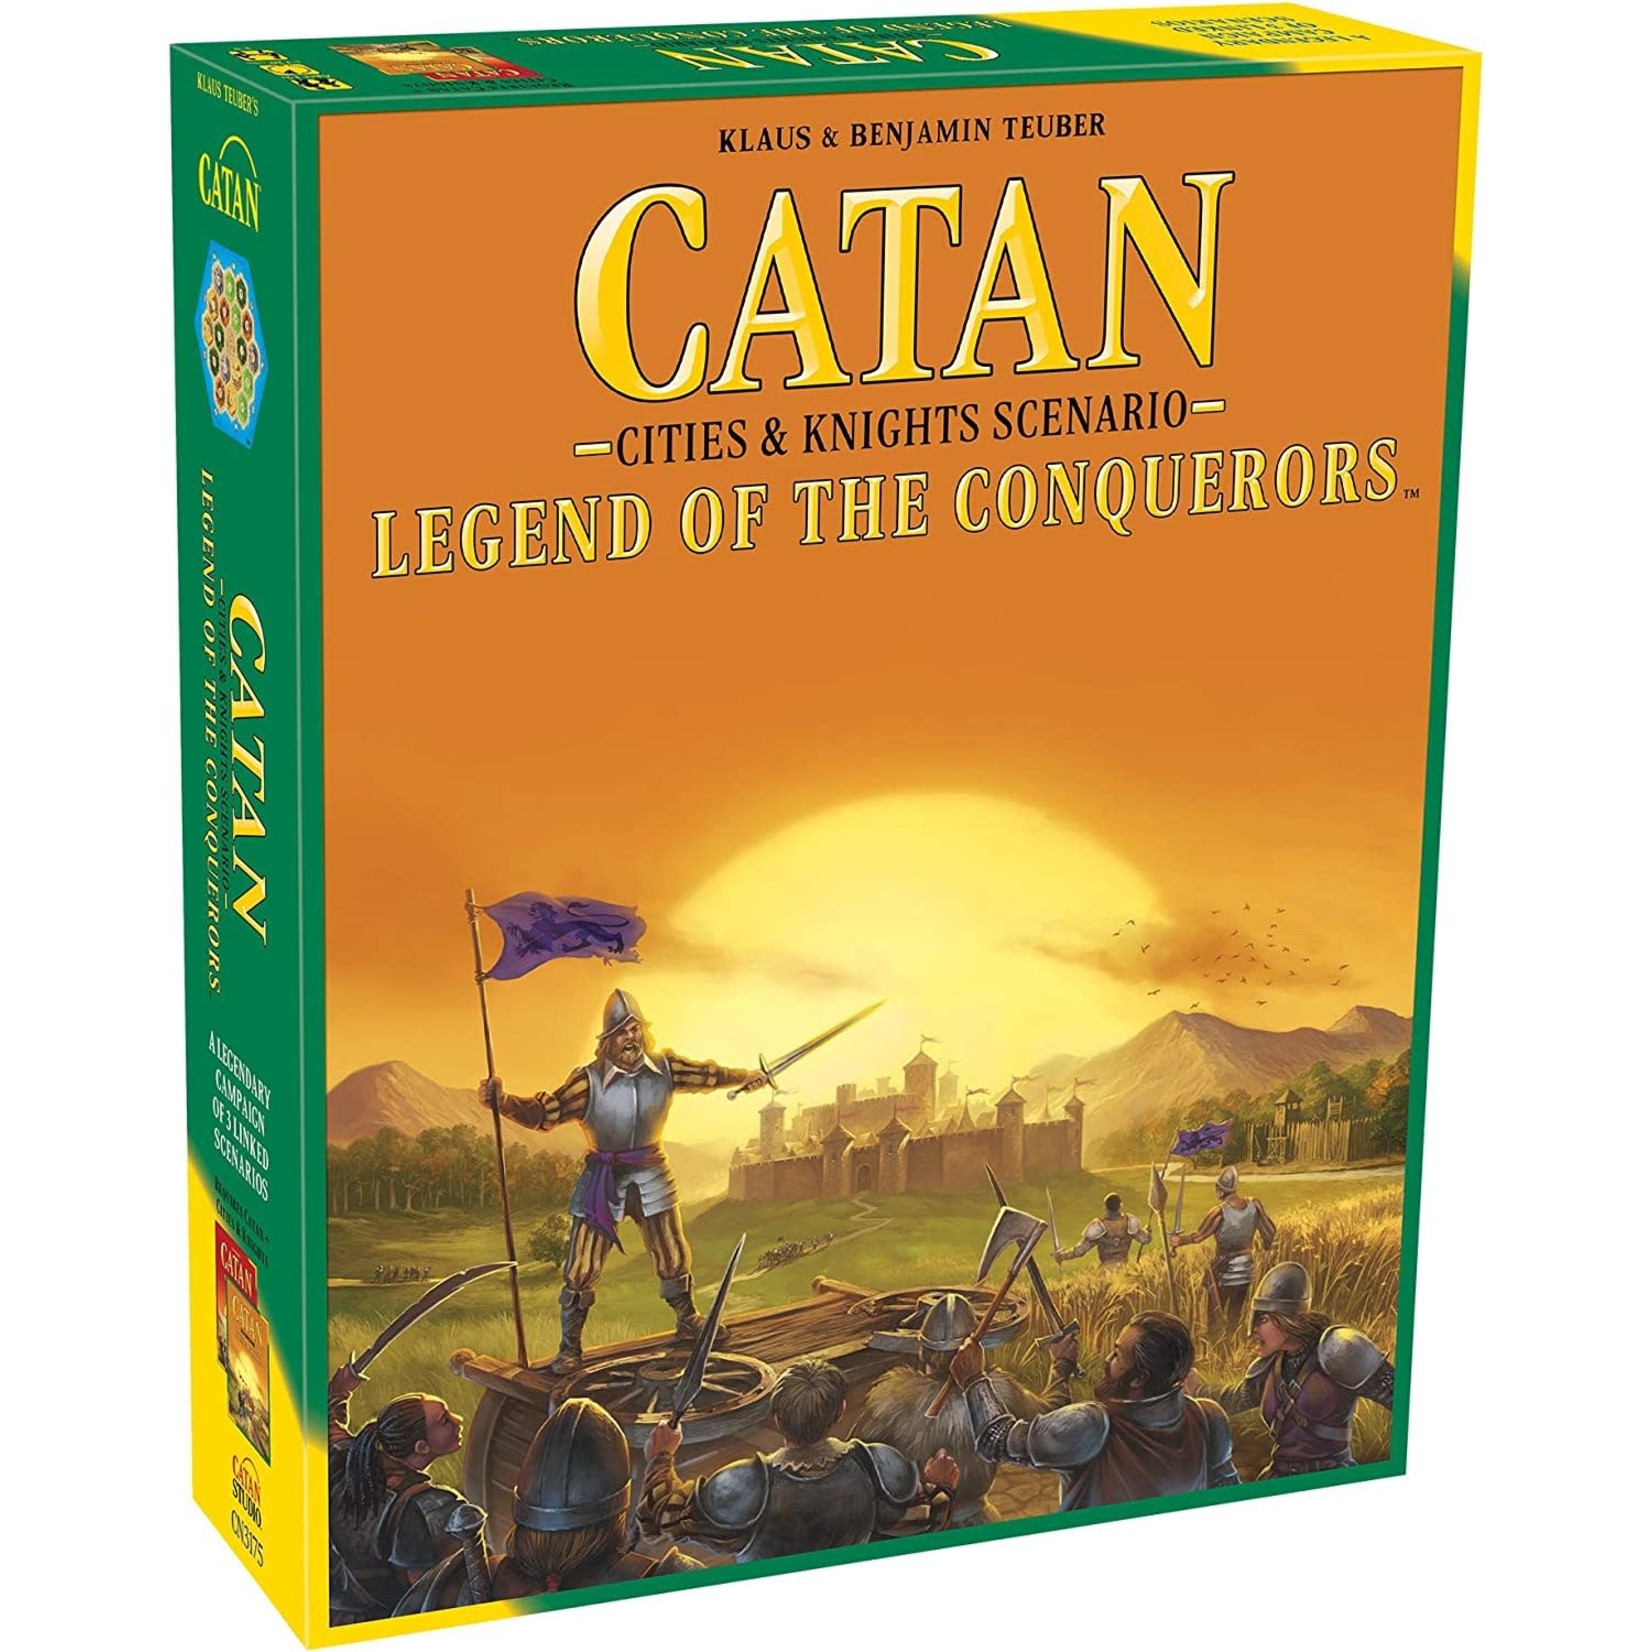 Catan Studio Catan - Legend of the Conquerers Expansion